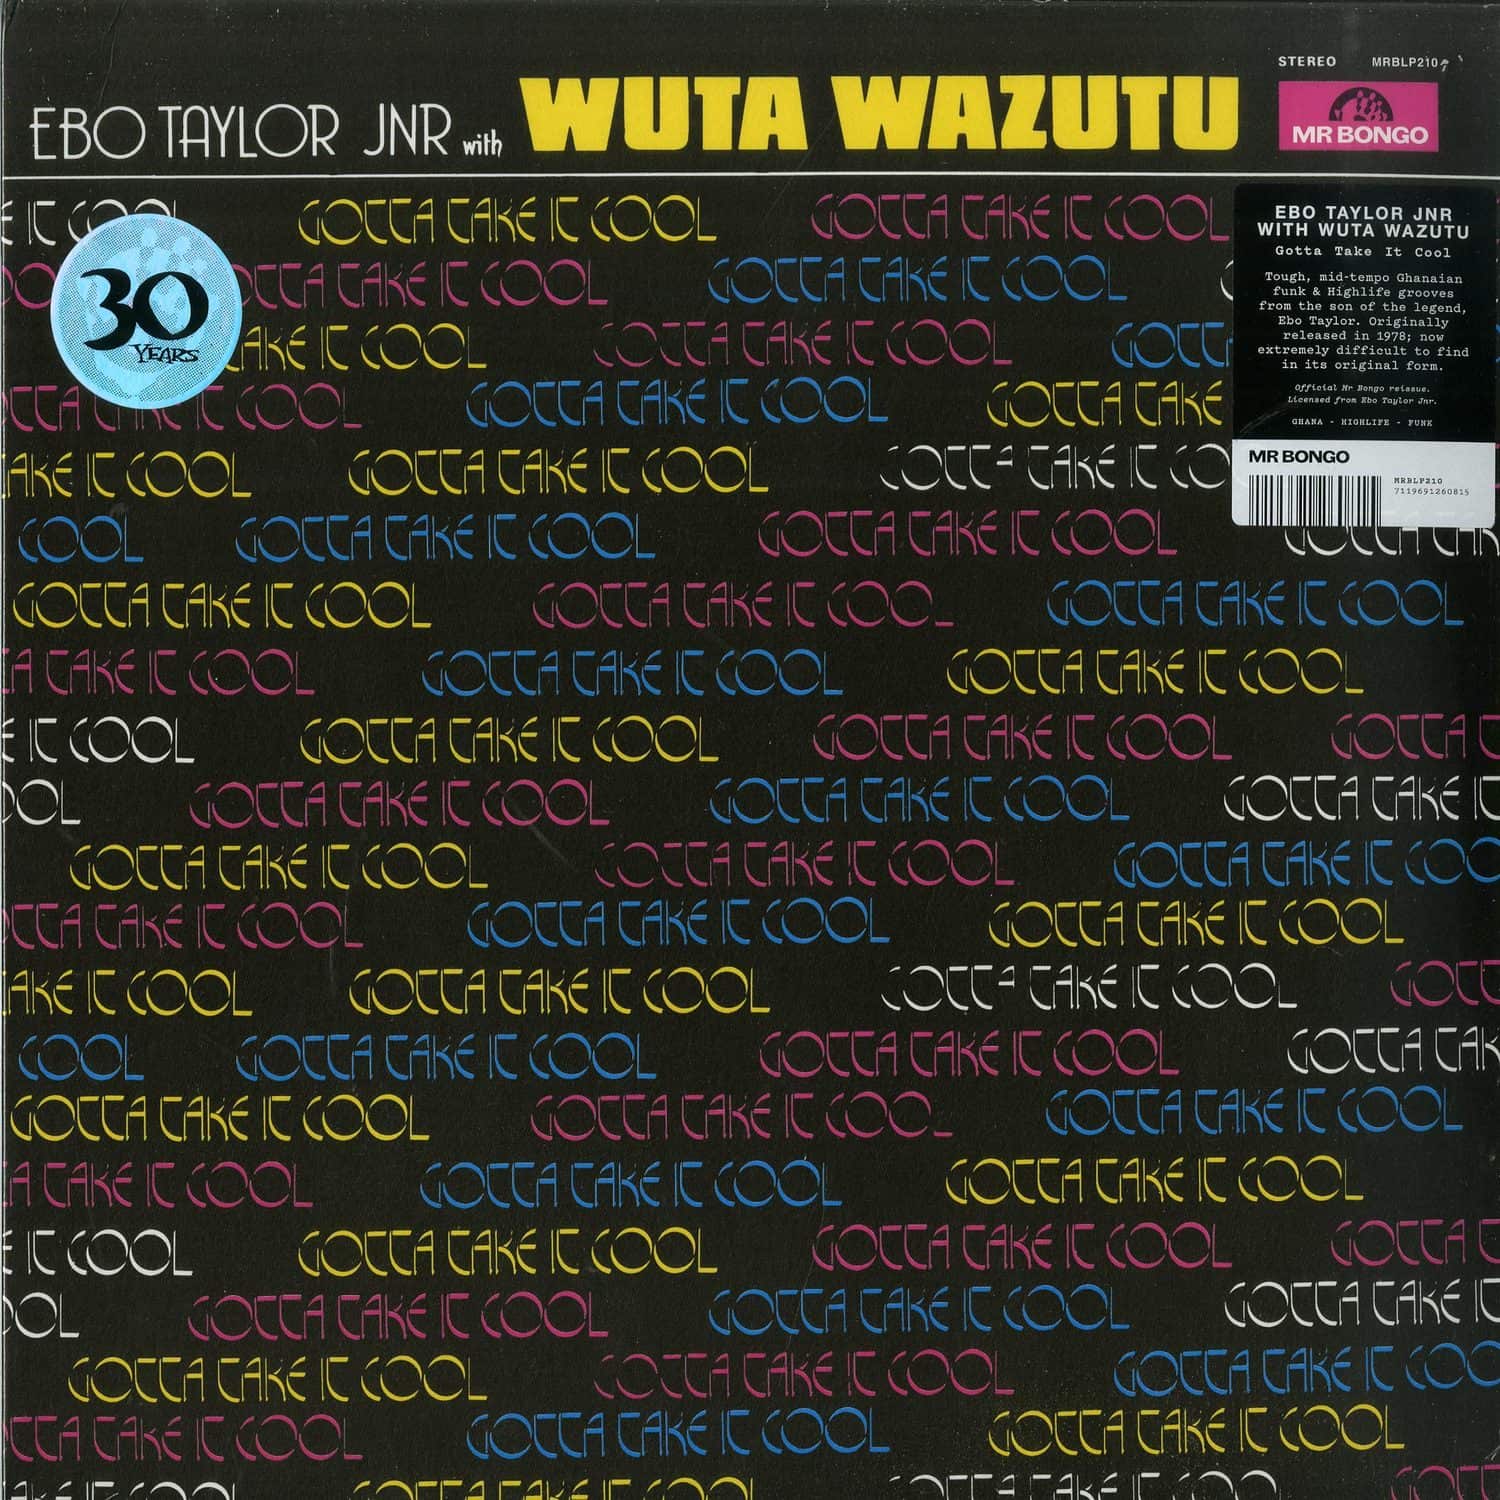 Ebo Taylor Jnr with Wuta Wazutu - GOTTA TAKE IT COOL 